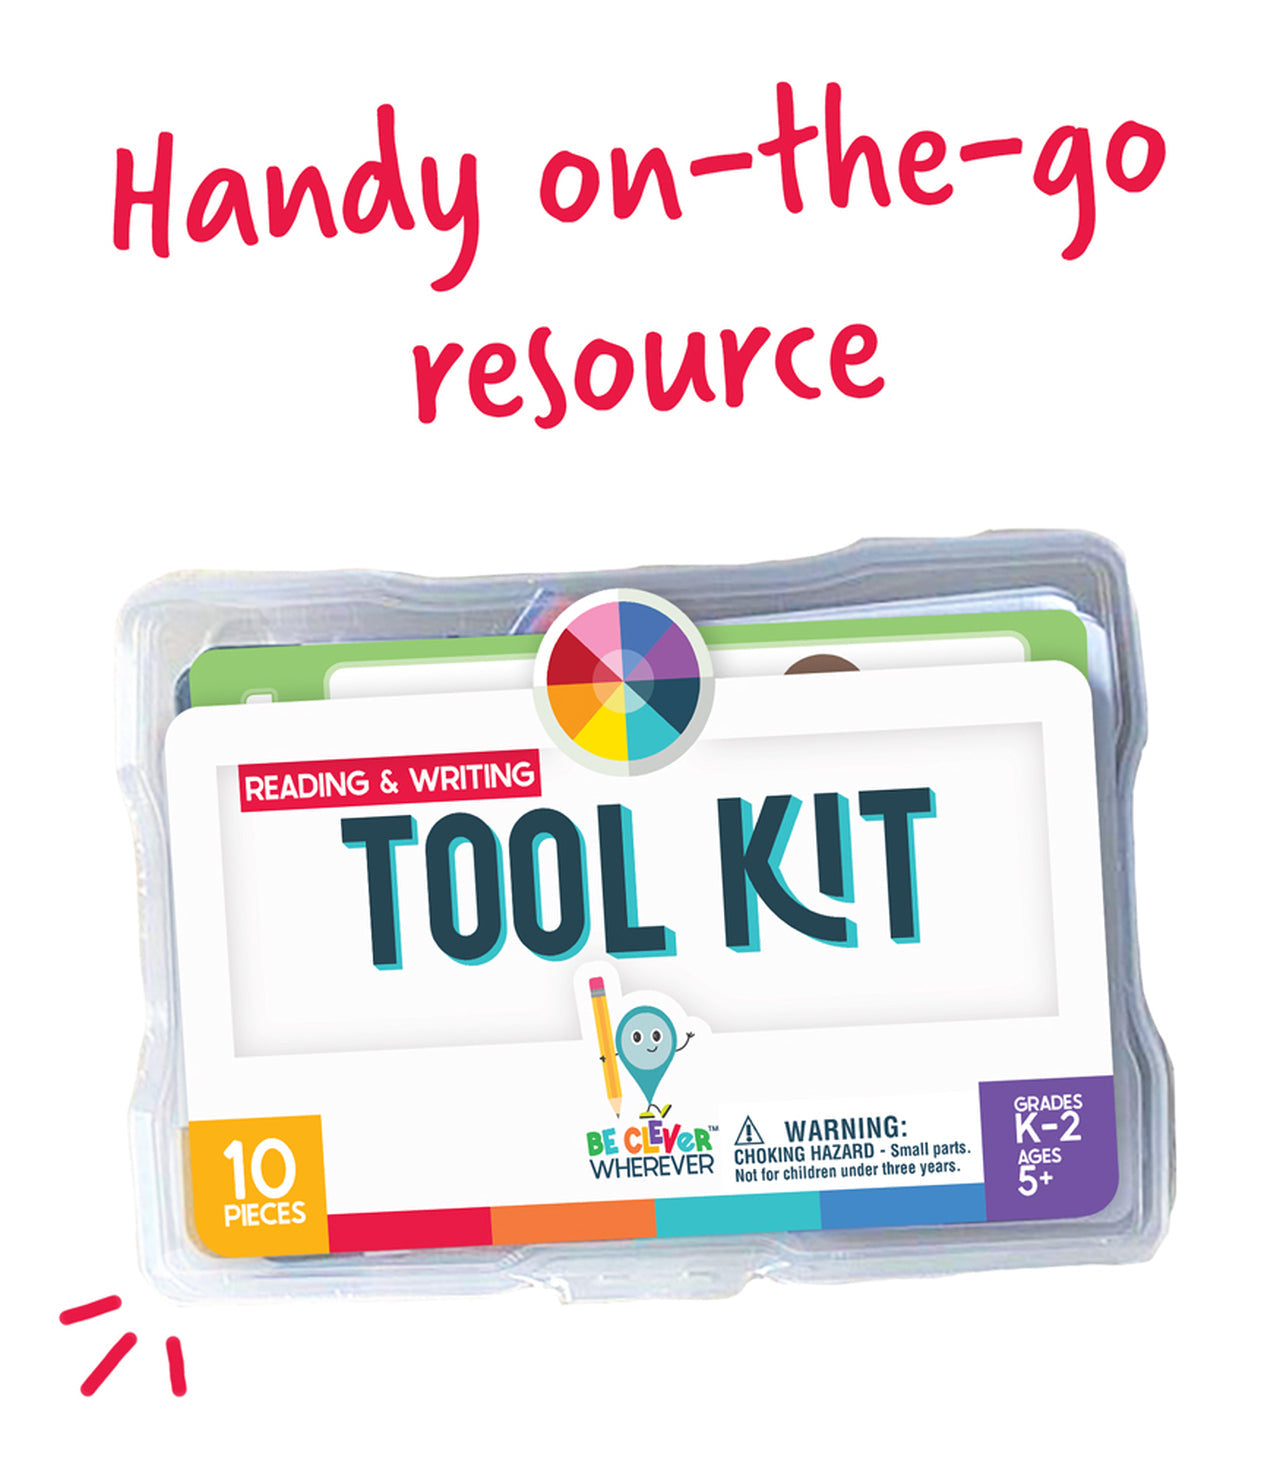 Reading & Writing Tool Kit Grades K-2